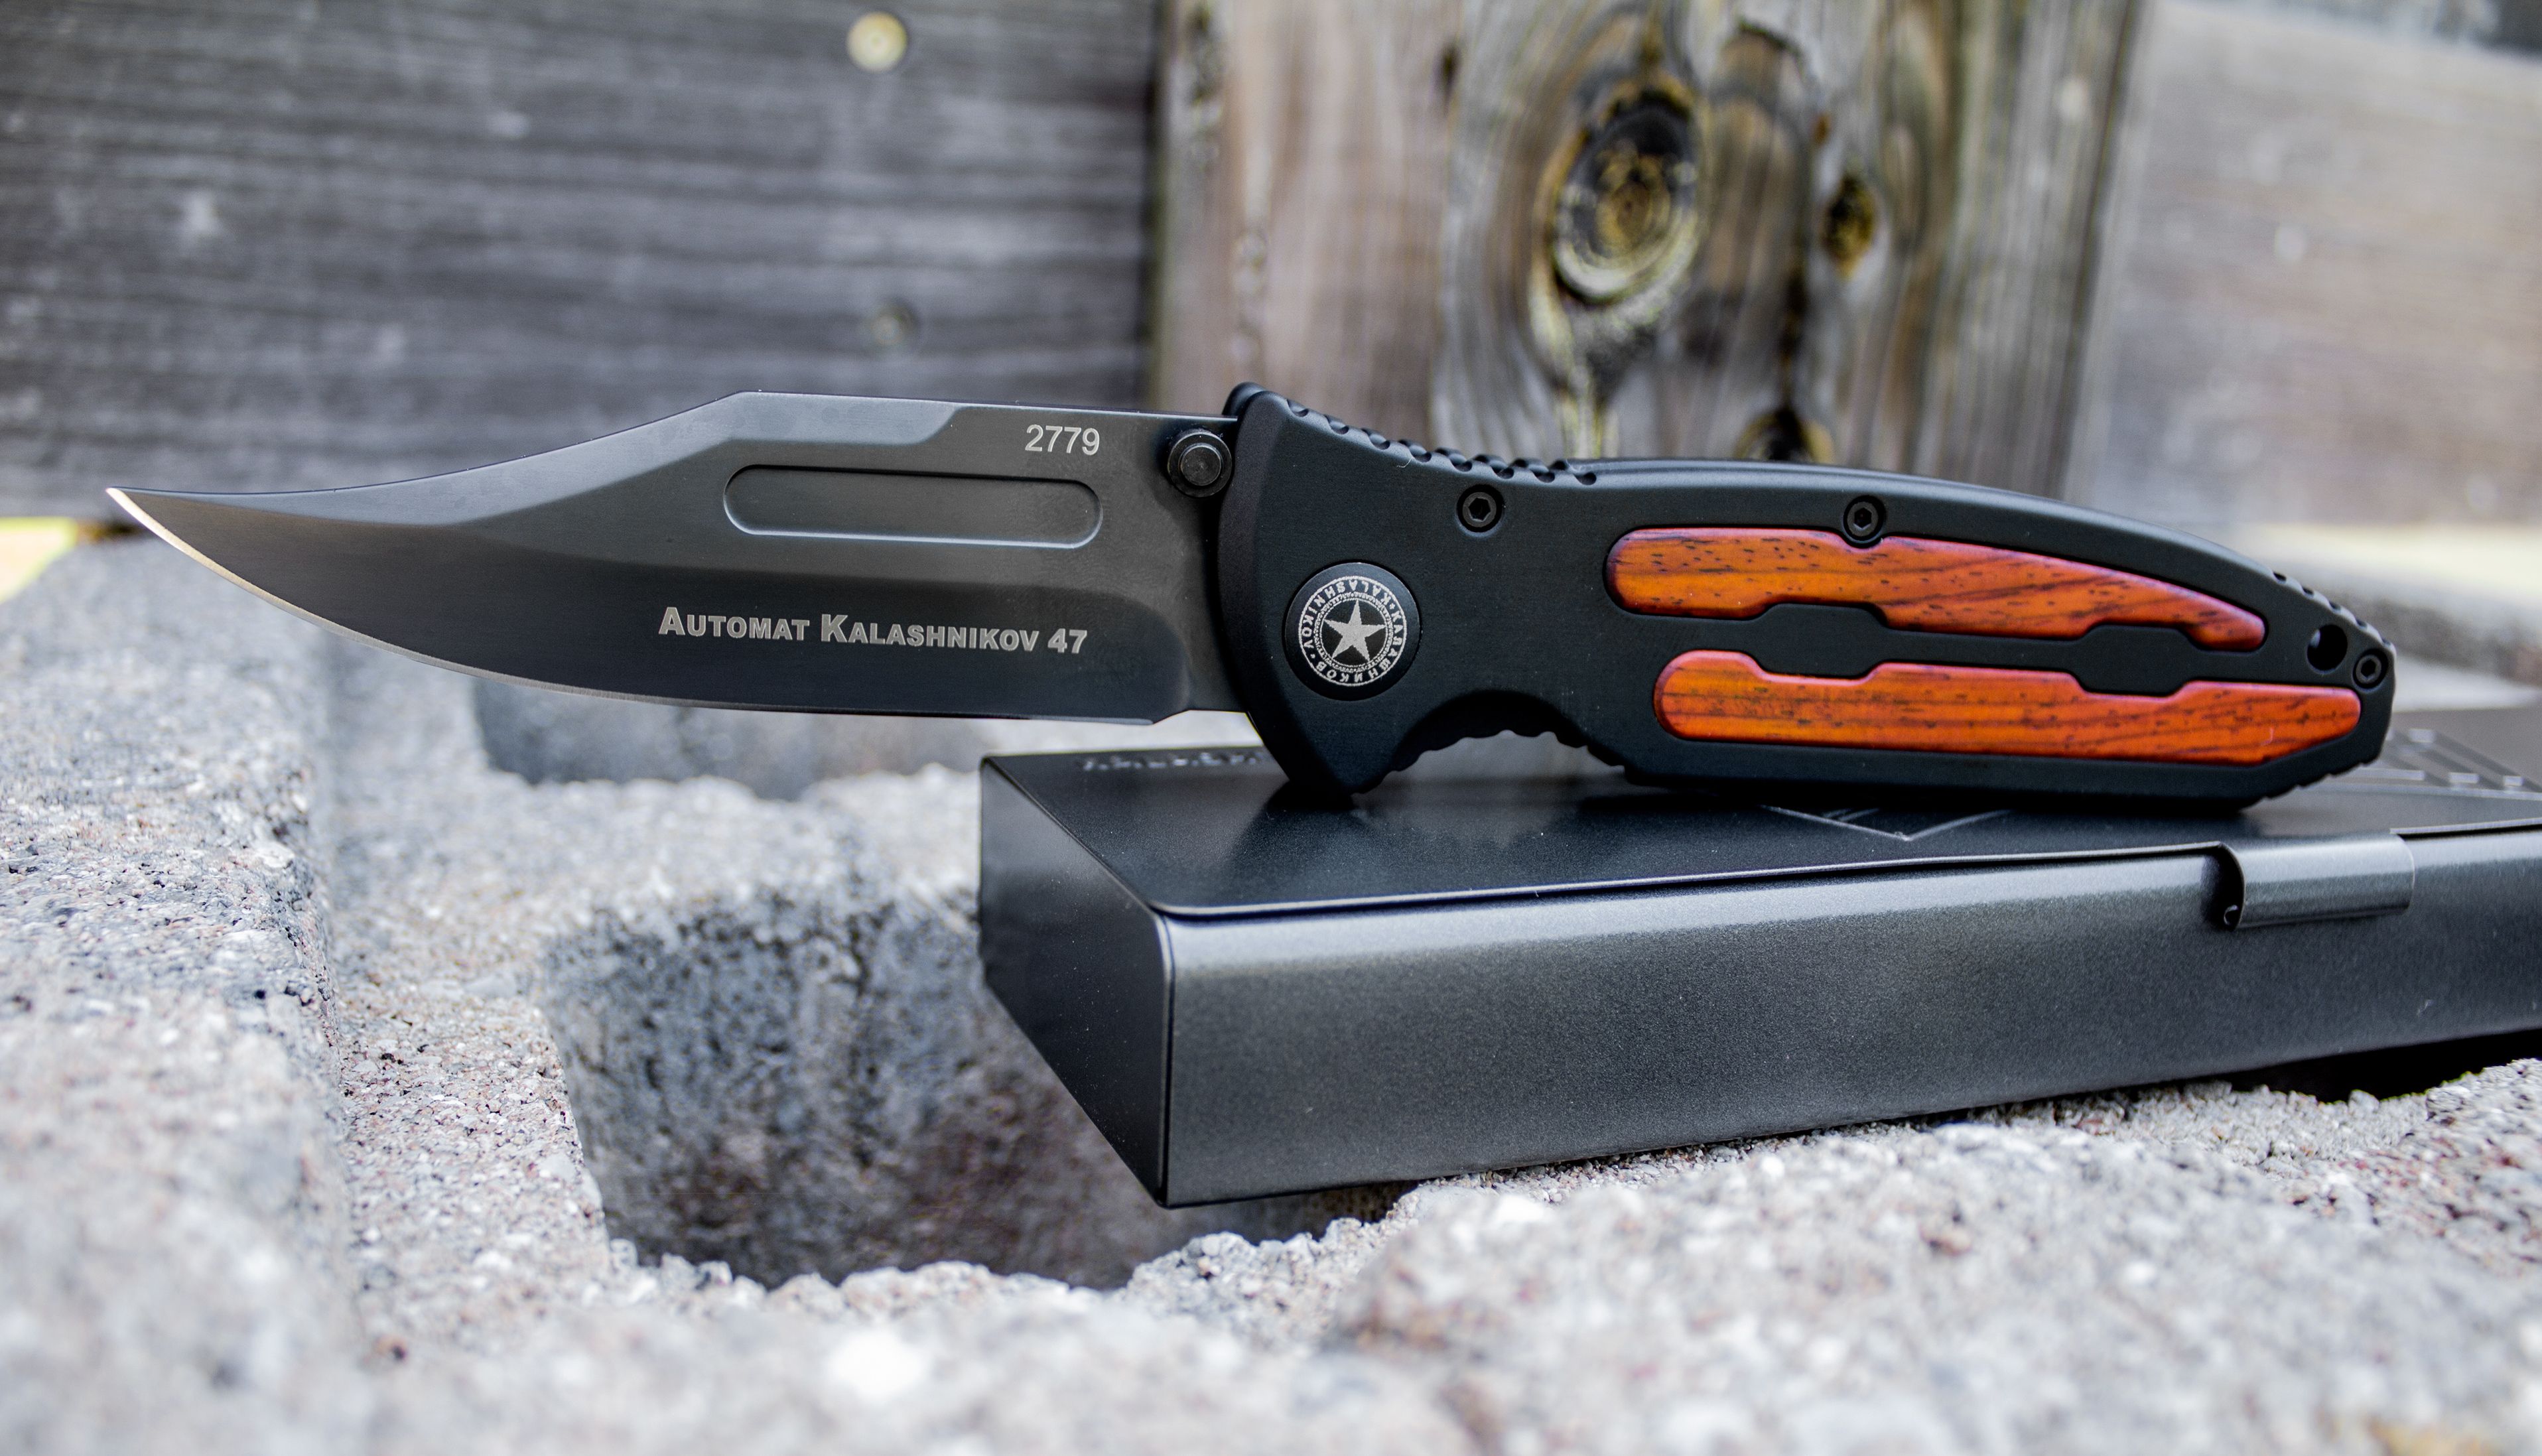 Boker Kalashnikov Auto Knife, Box Cutter Blade [Exclusive]